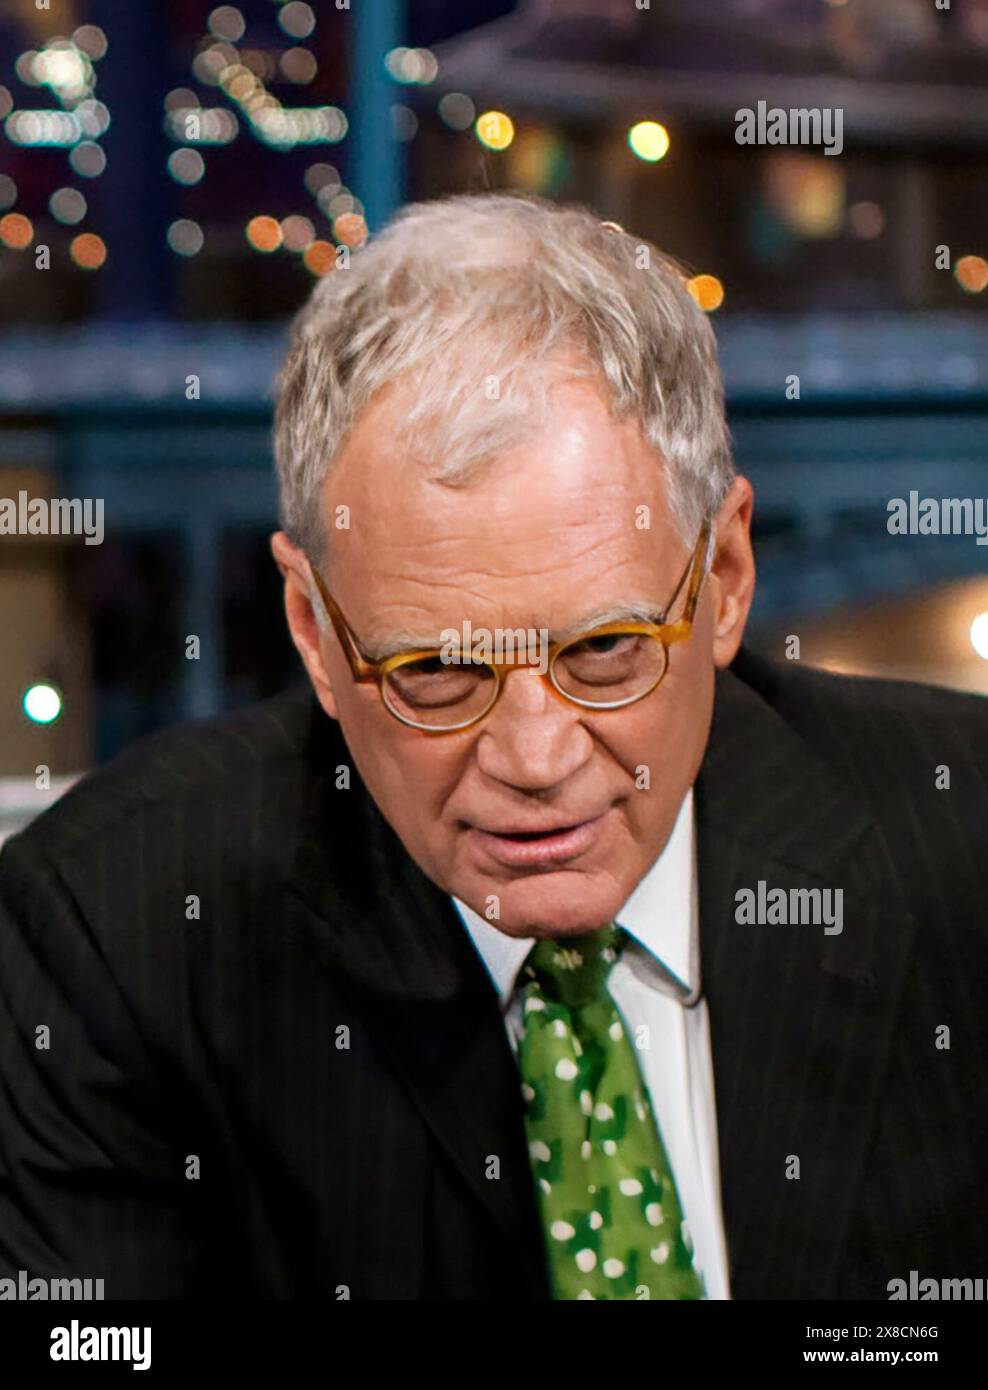 David Letterman. Porträt des Chatshow-Moderators David Michael Letterman (* 1947) im Jahr 2009 Stockfoto